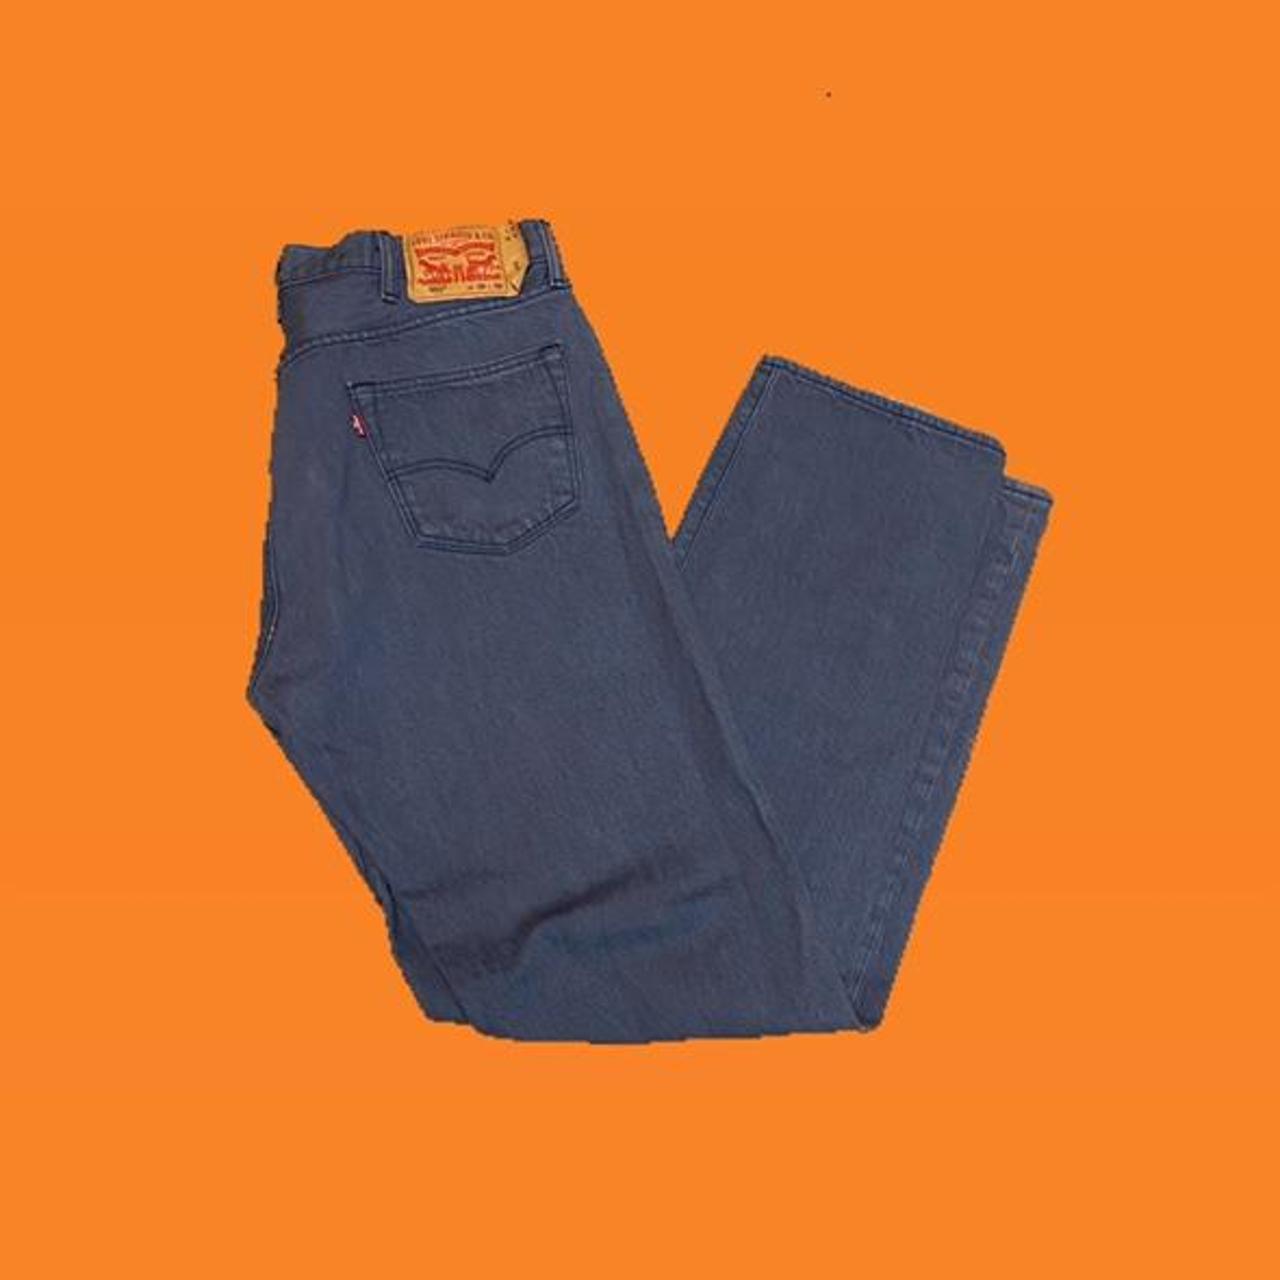 Levis 501 White Oak Cone Denim Jeans - FREE US - Depop